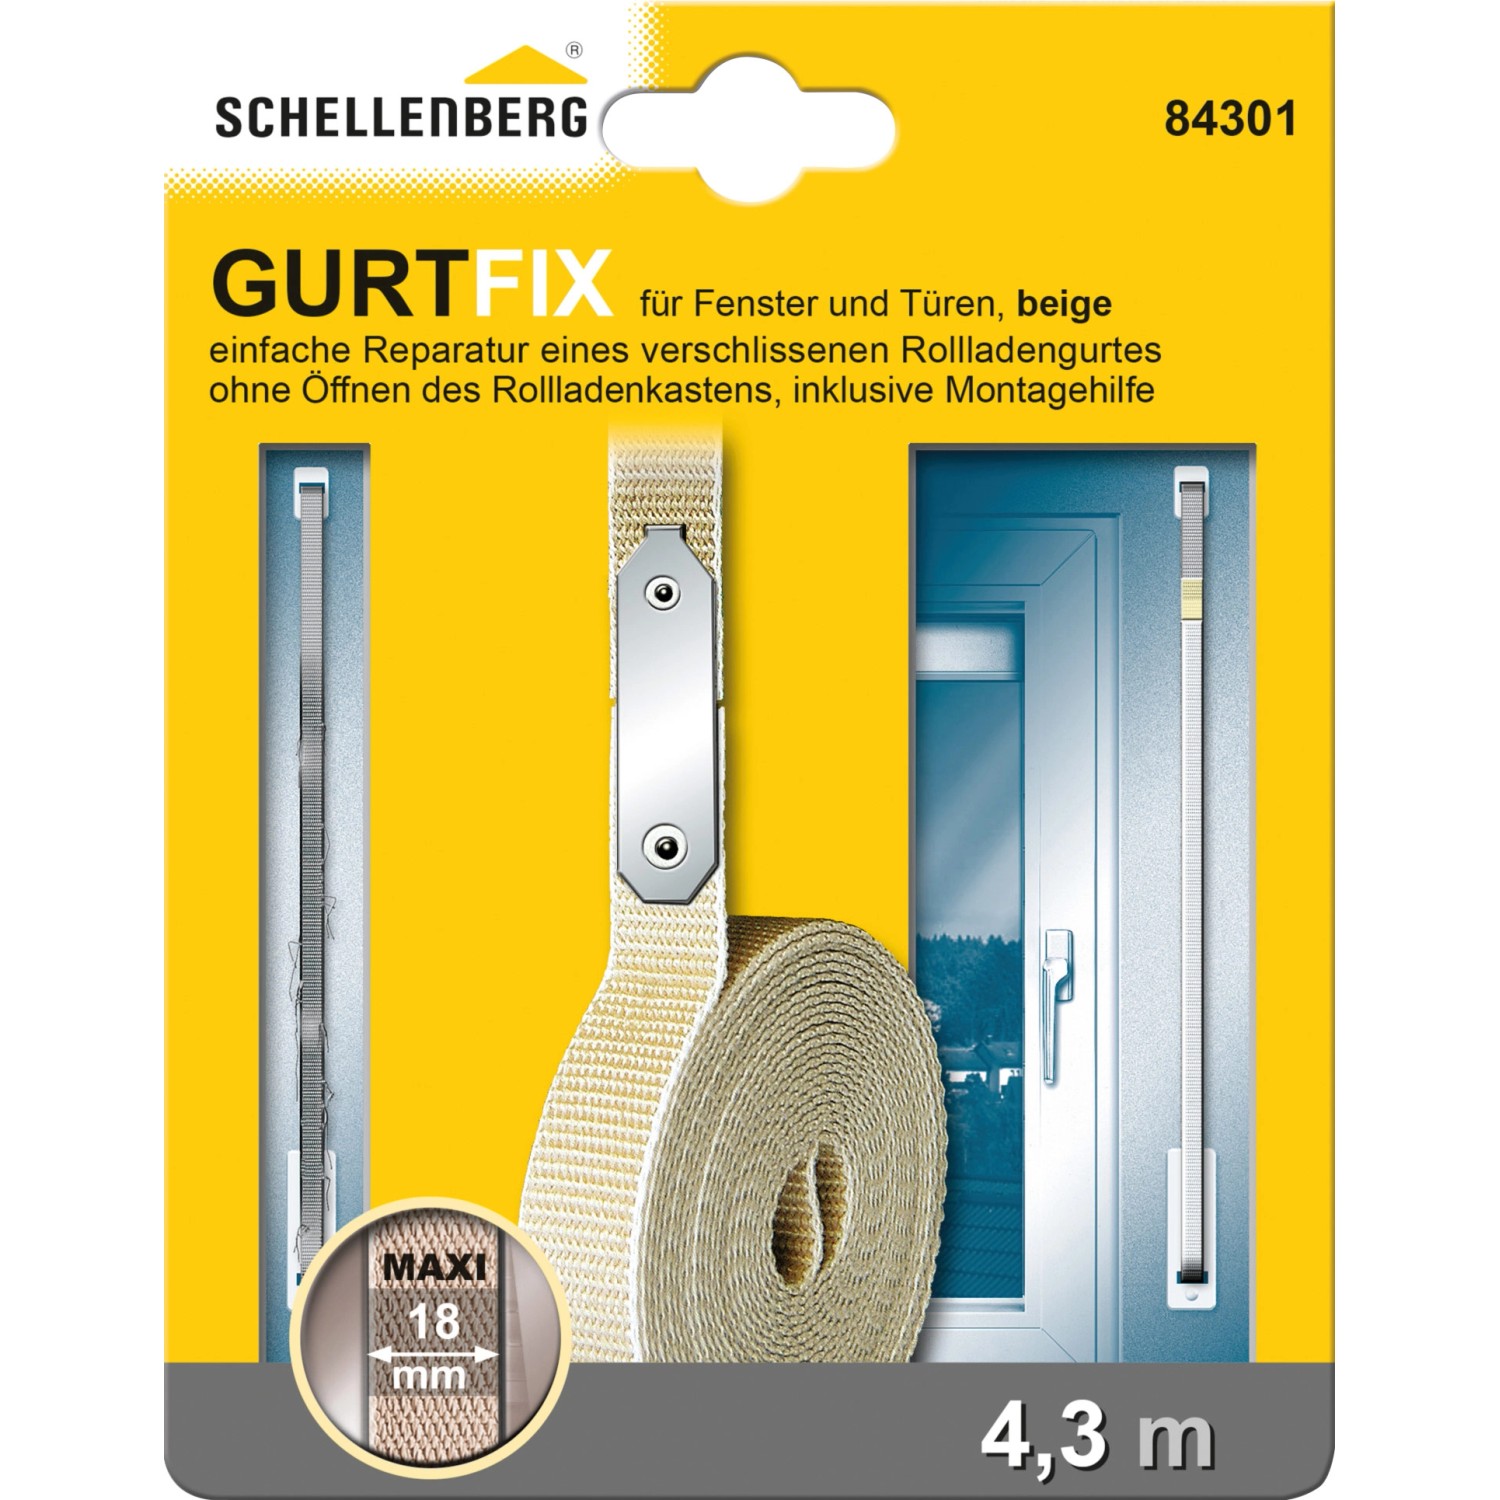 Beige Gurtfix Schellenberg 18 Maxi mm Reparaturset